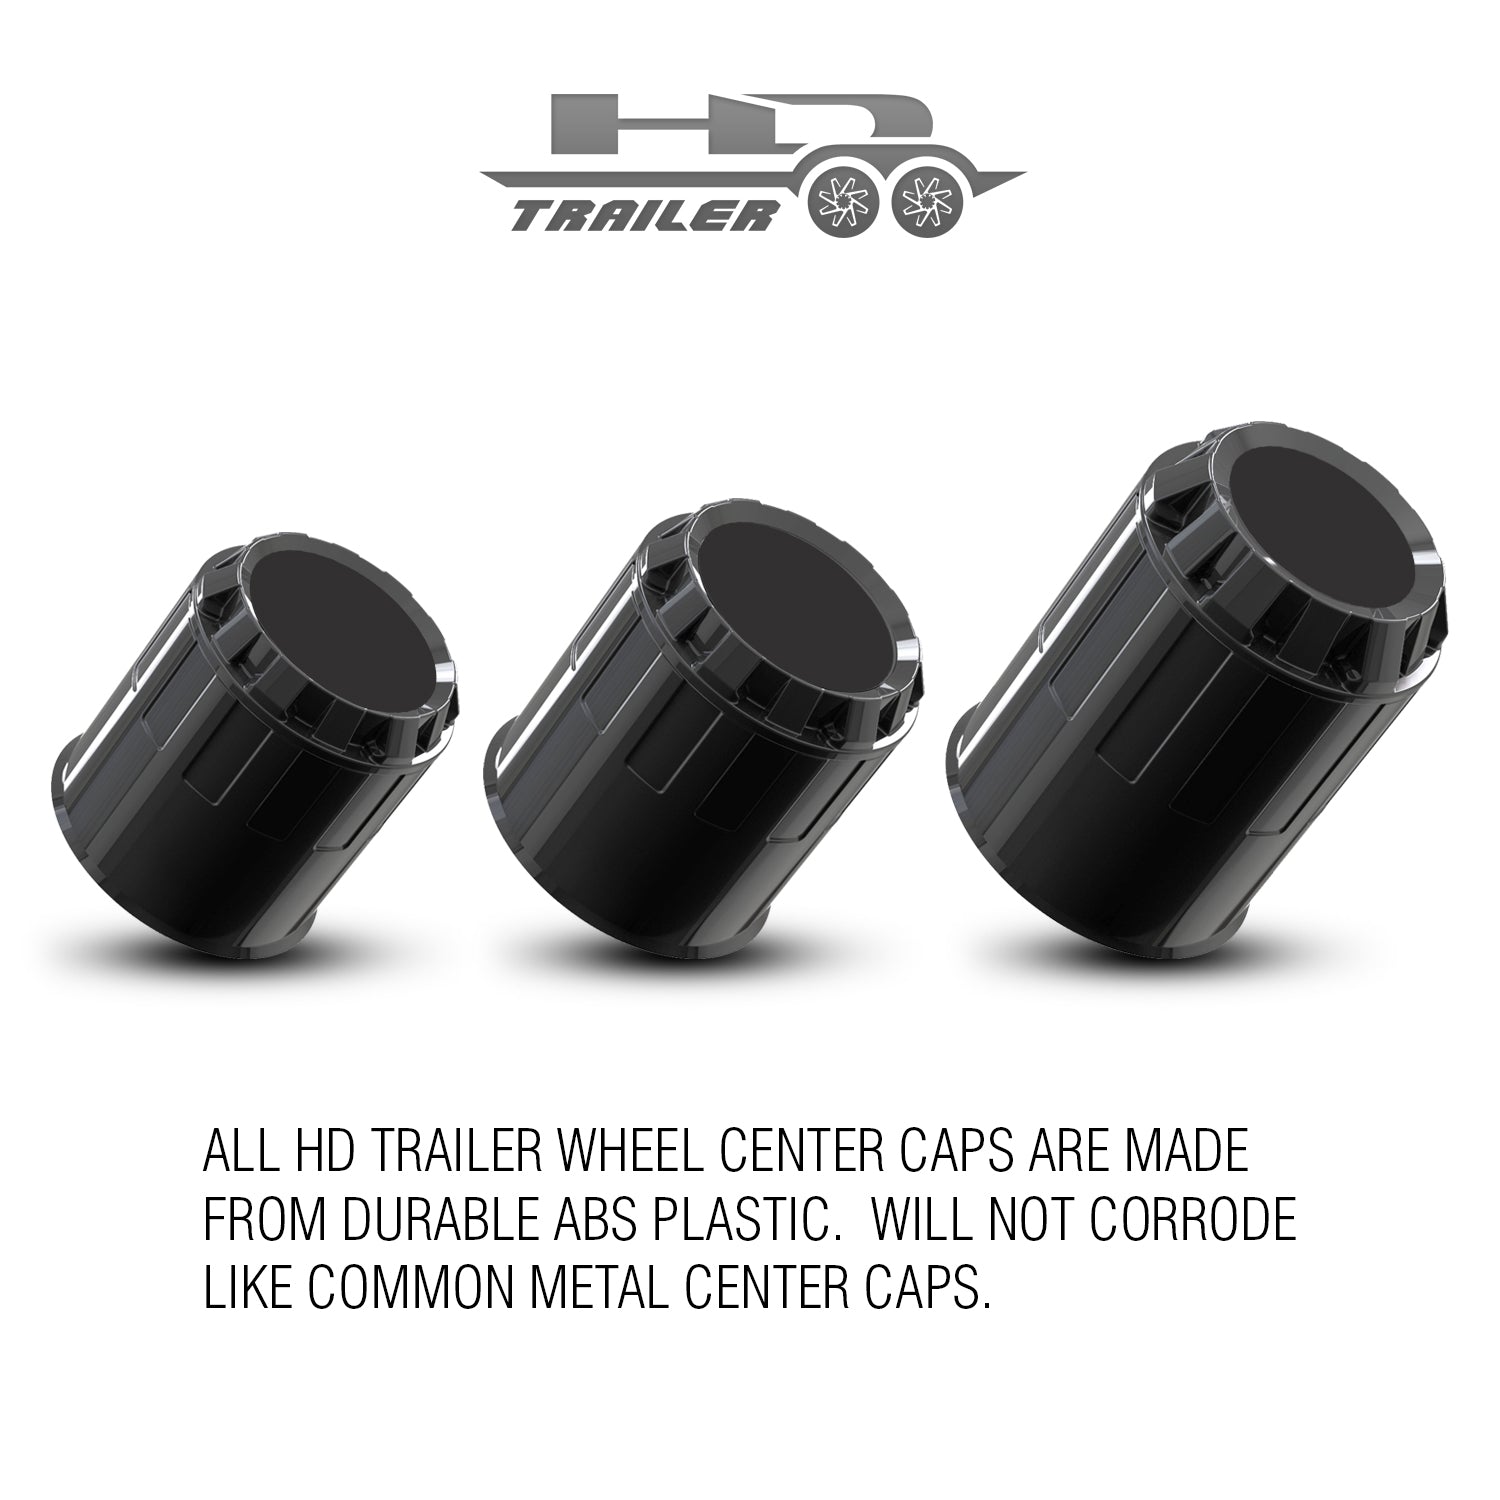 WTB: Center caps for 13x5.5 Appliance wheels